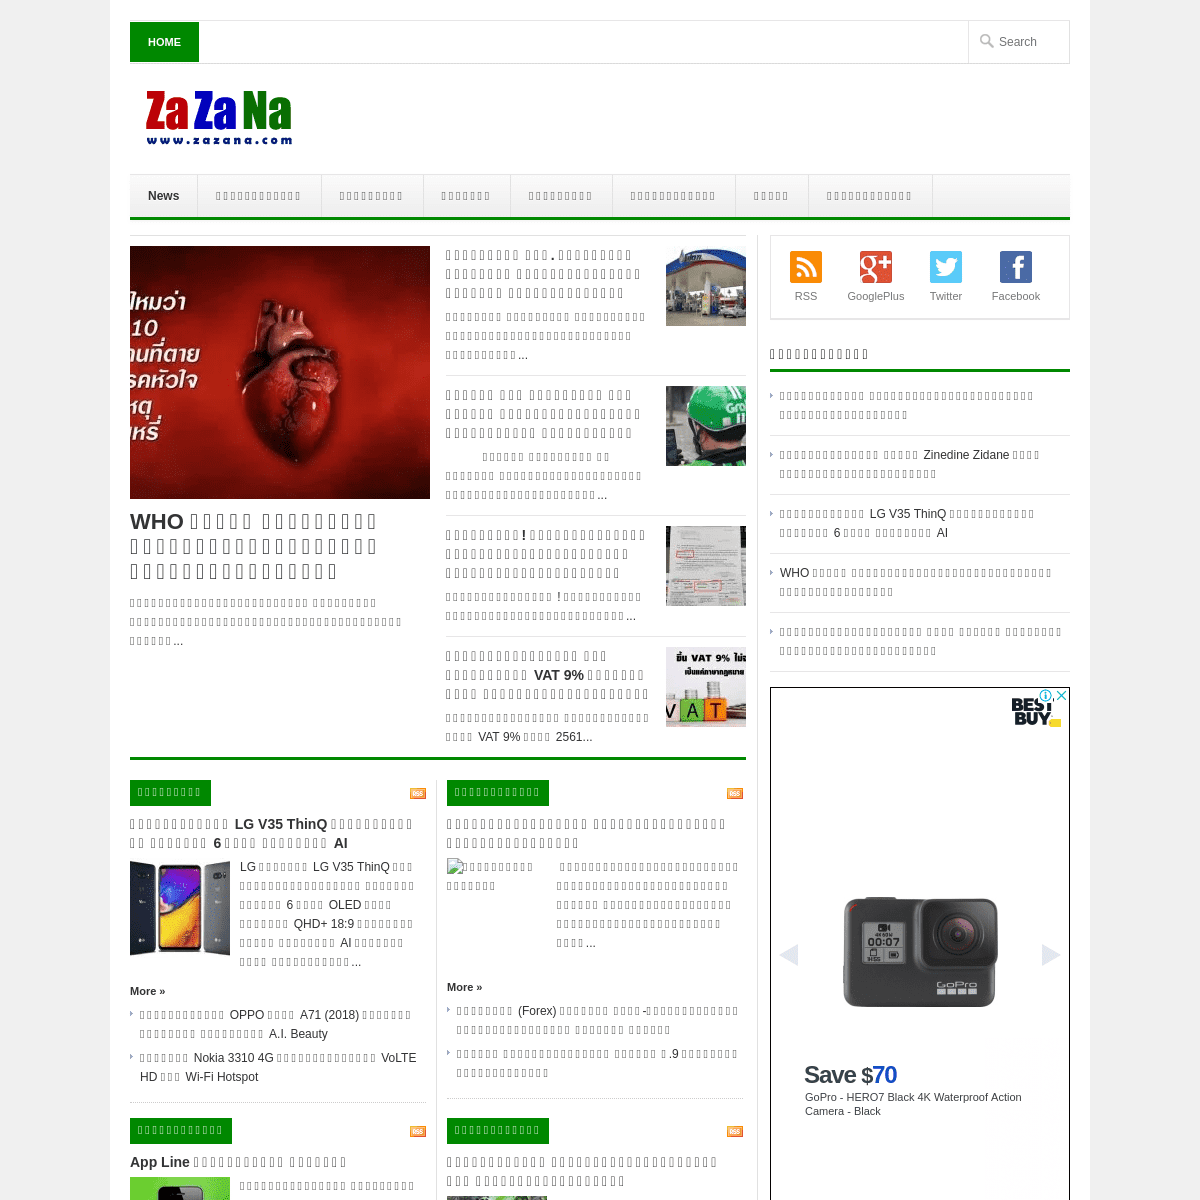 A complete backup of zazana.com